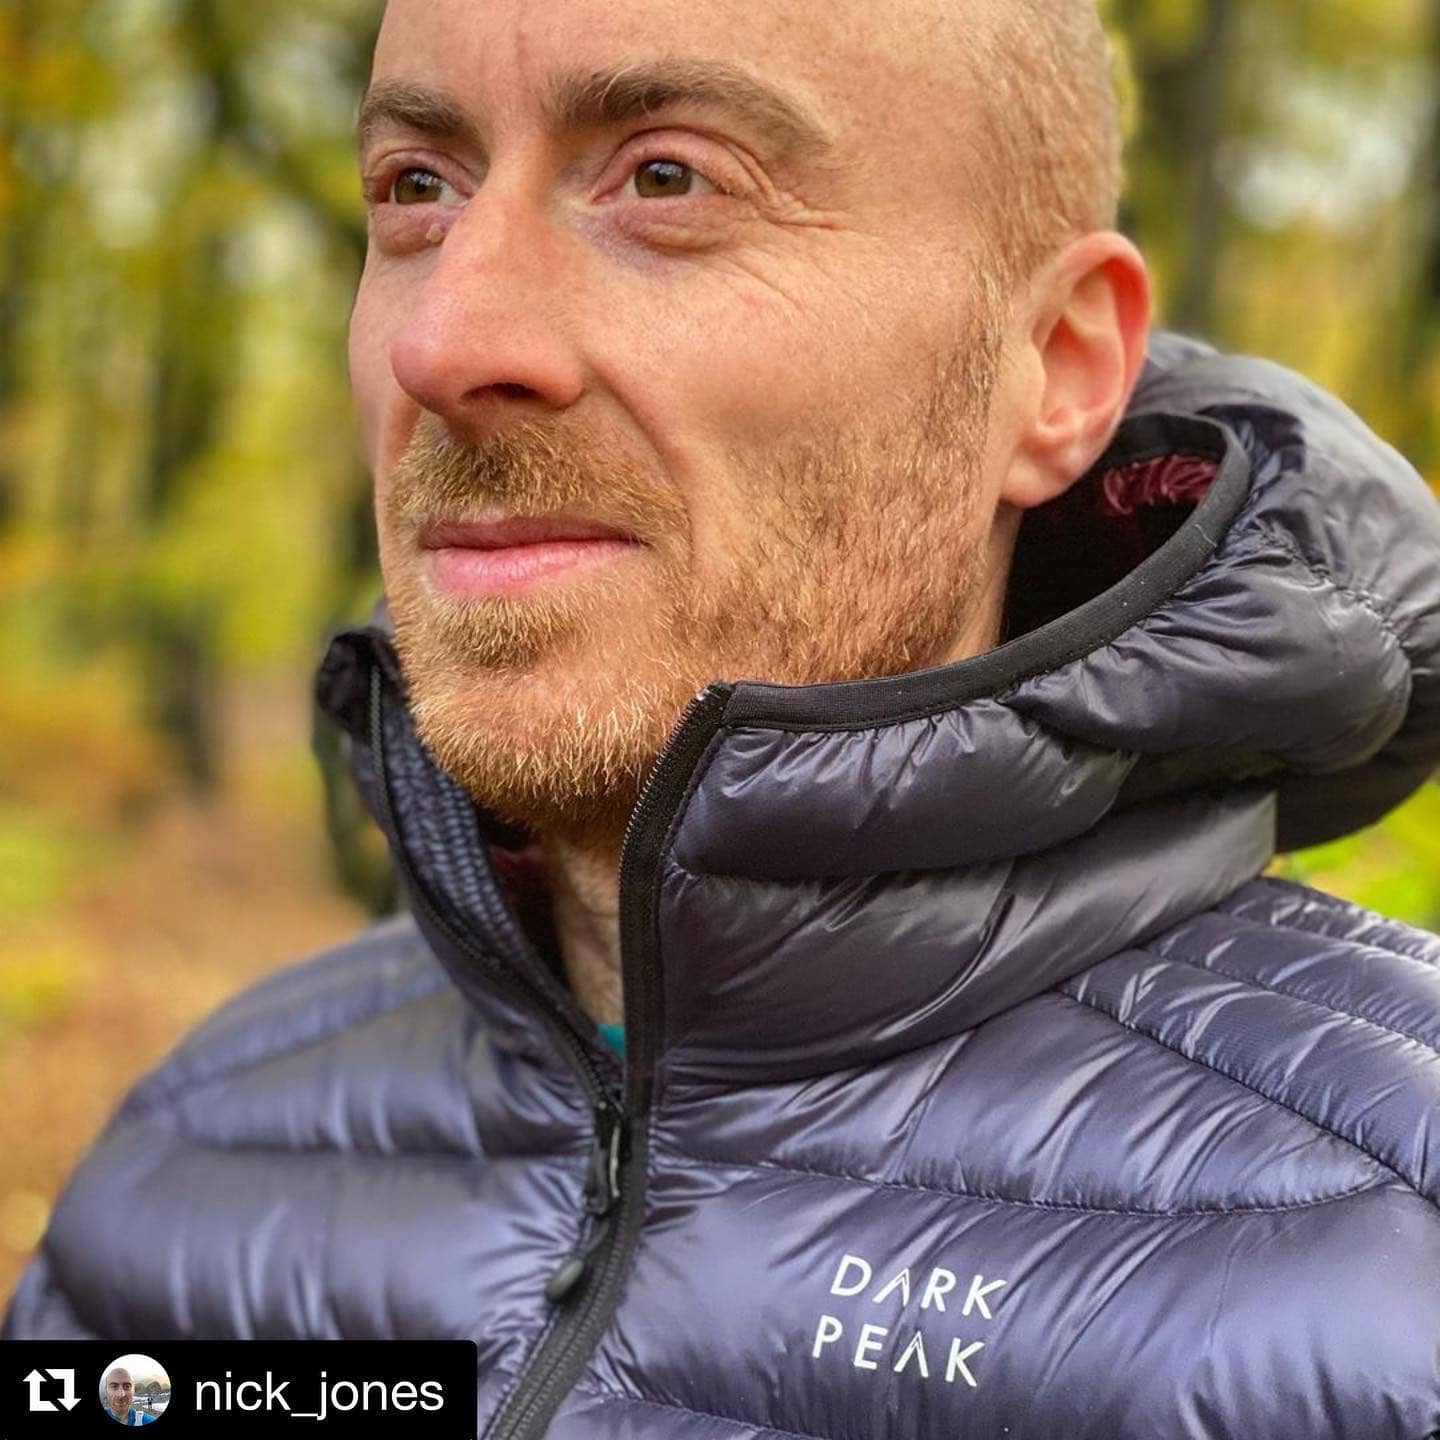 Repost @nick_jones

Loving my new @dark.peak down jacket that I won at the 75km Peak District Cha...